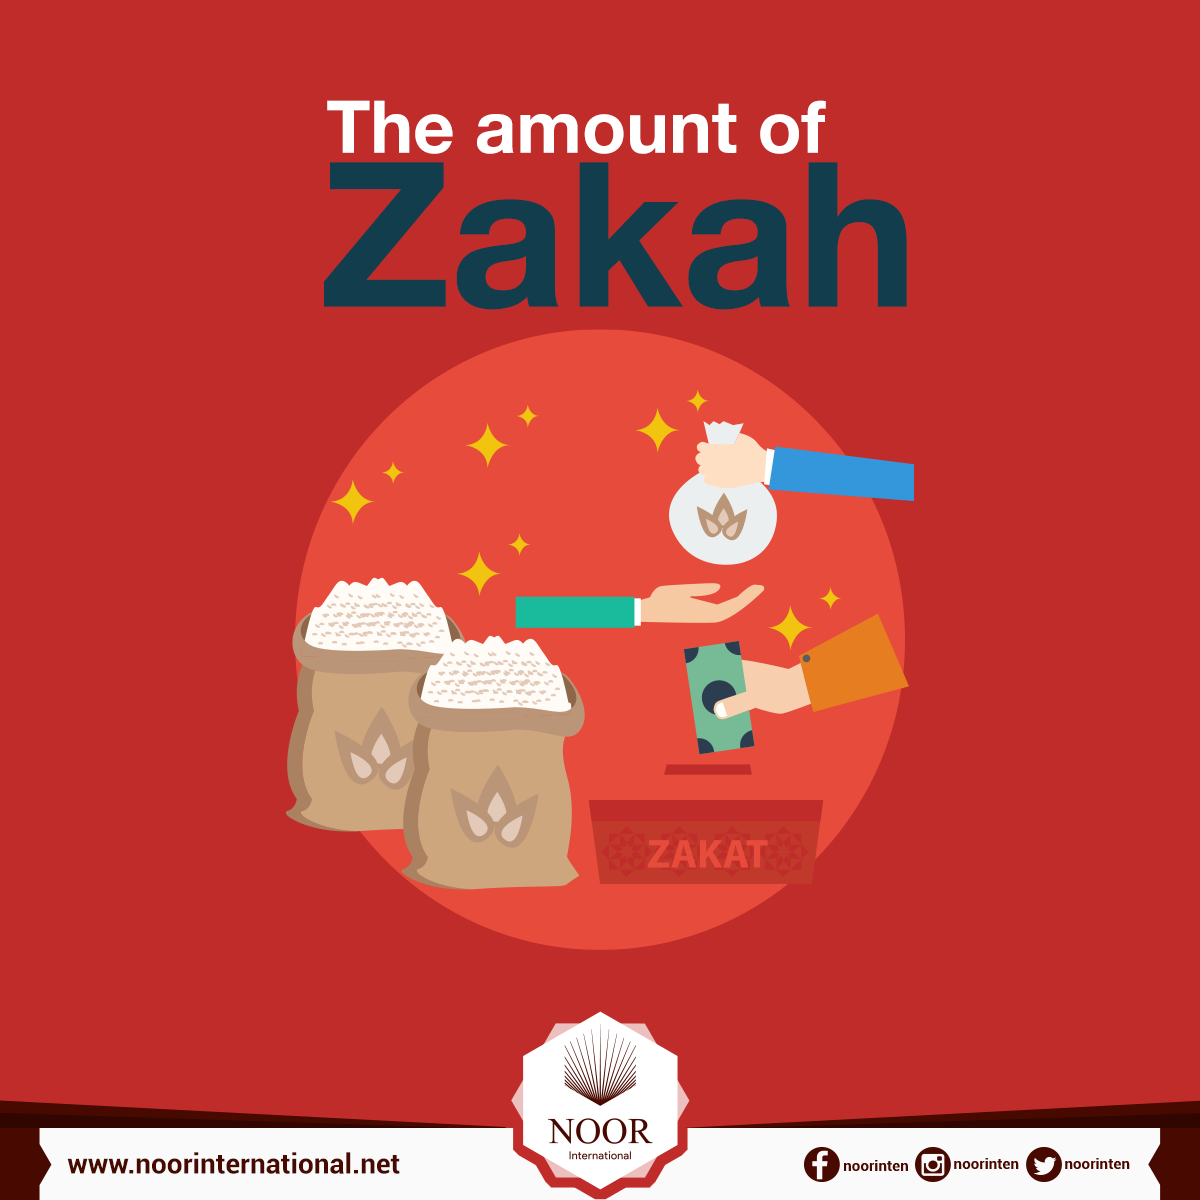 The amount of Zakah